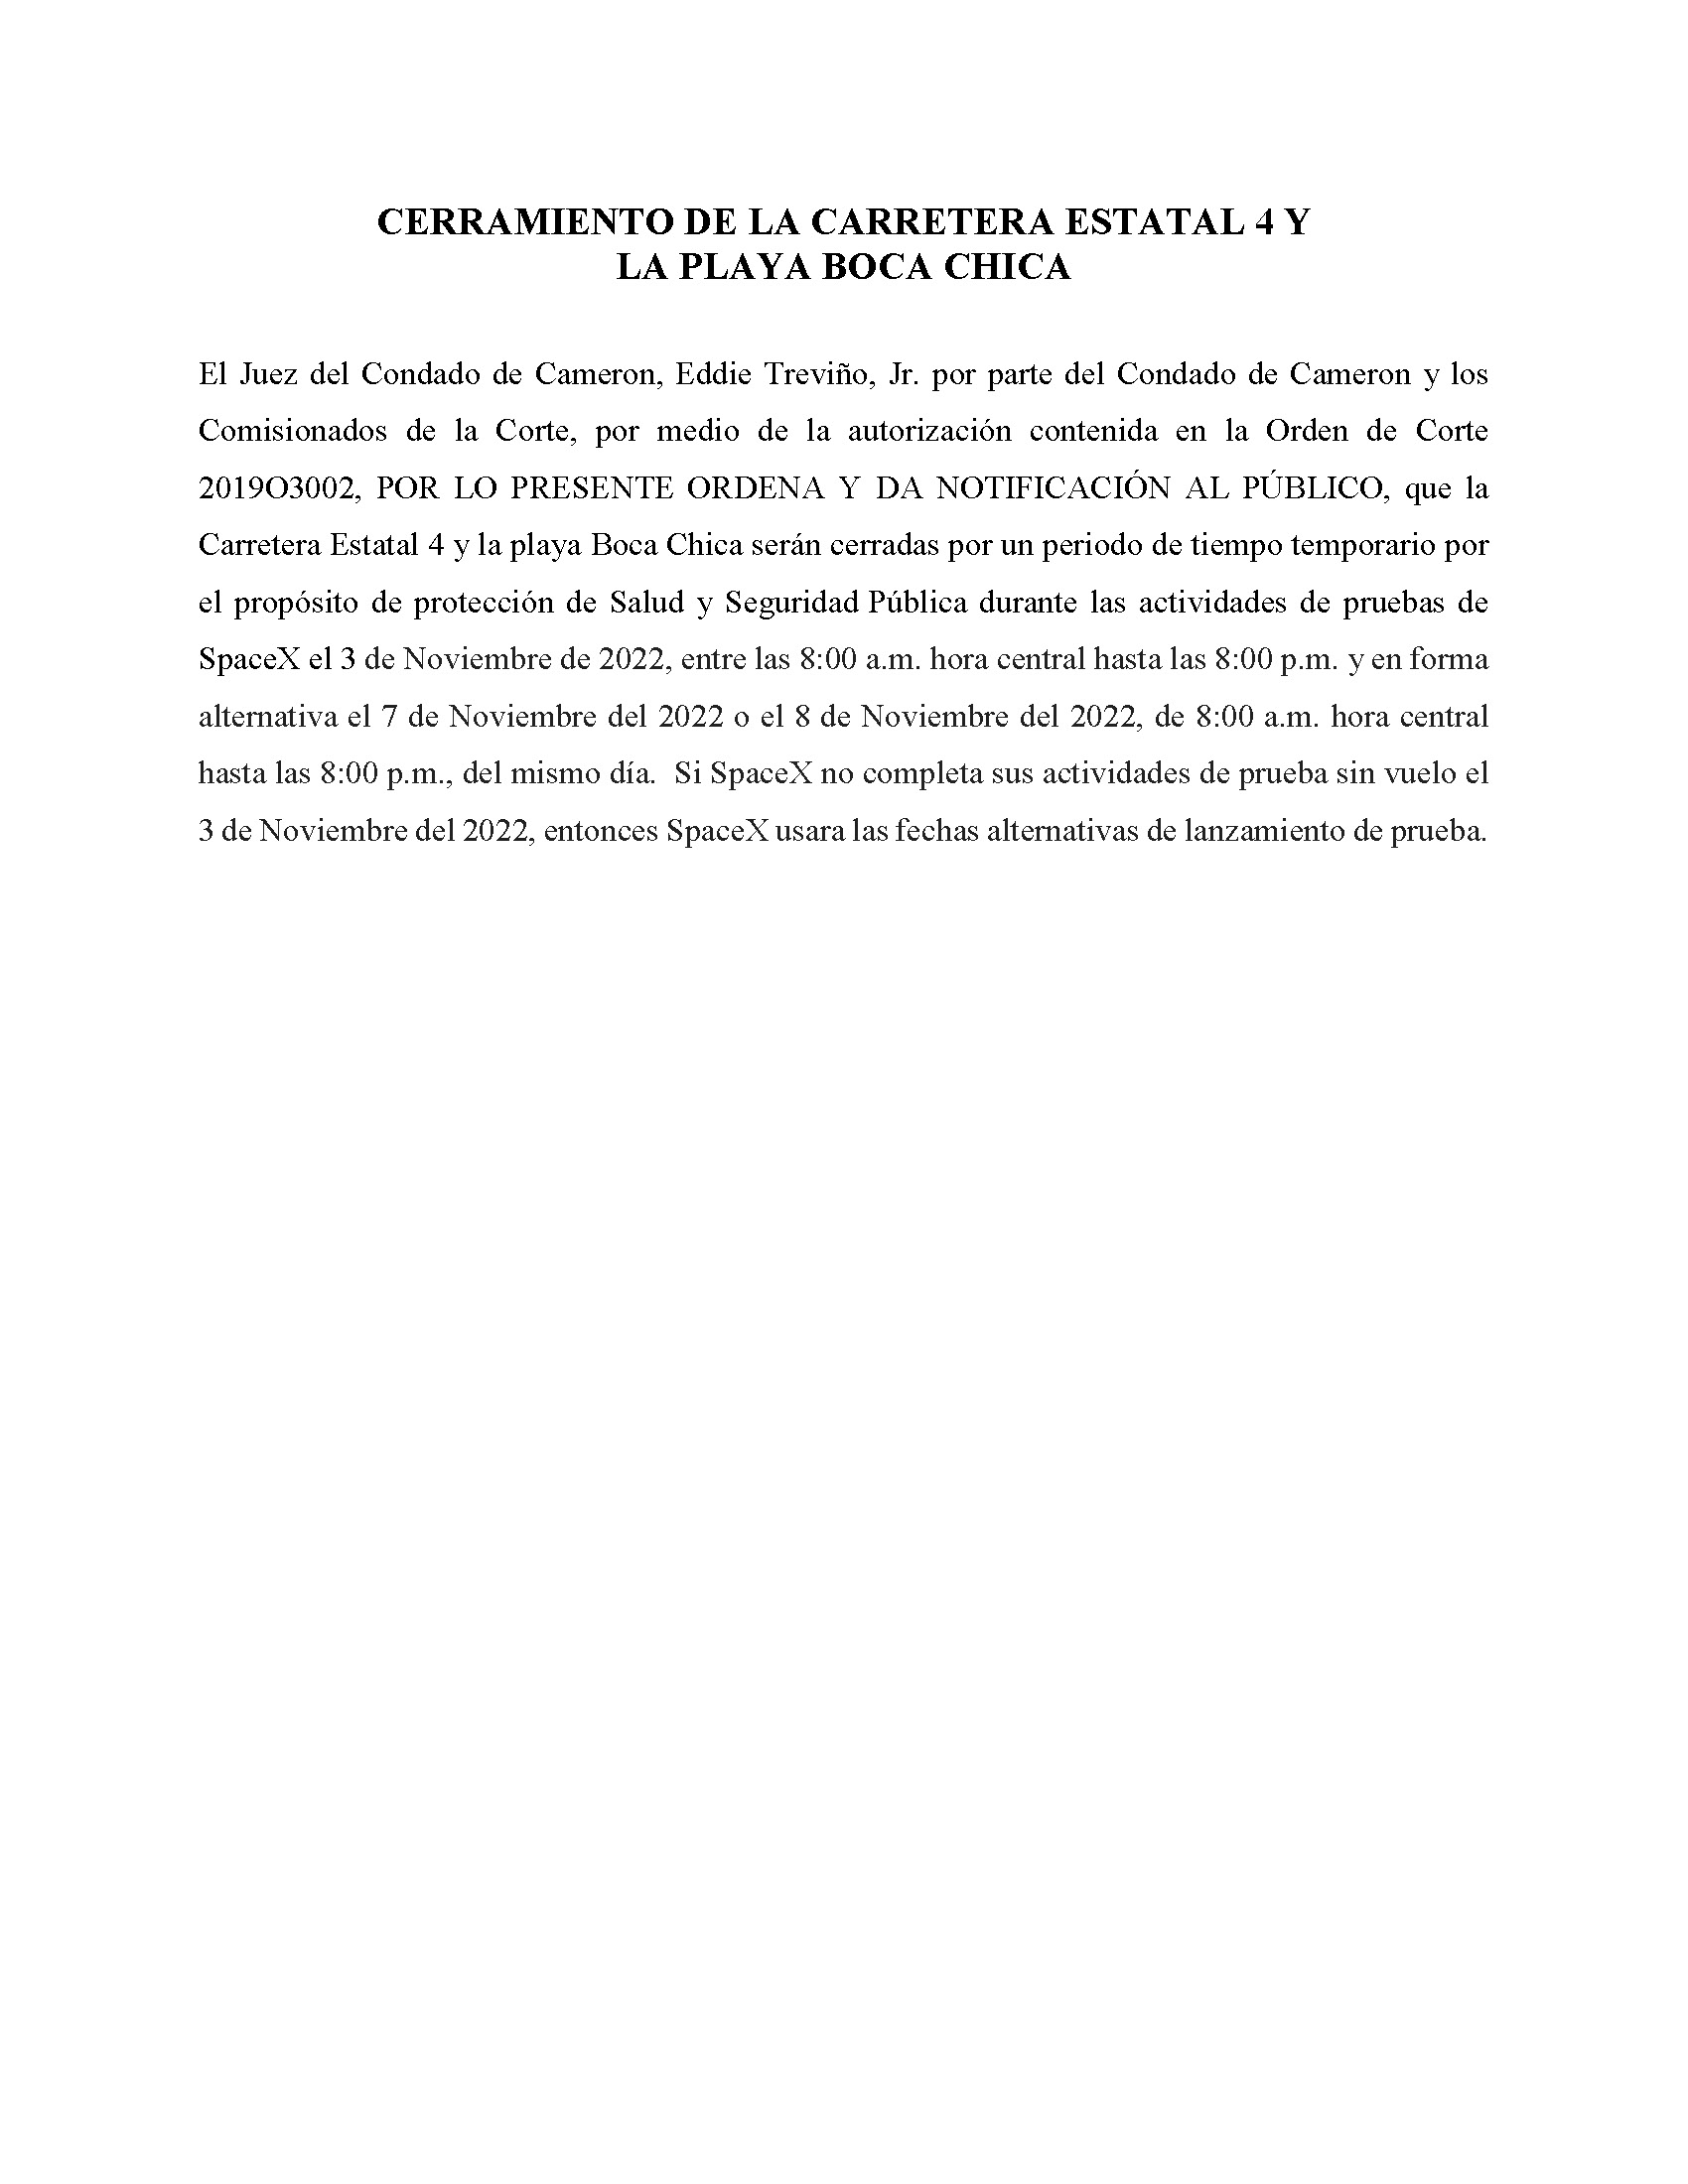 ORDER.CLOSURE OF HIGHWAY 4 Y LA PLAYA BOCA CHICA.SPANISH.11.03.2022